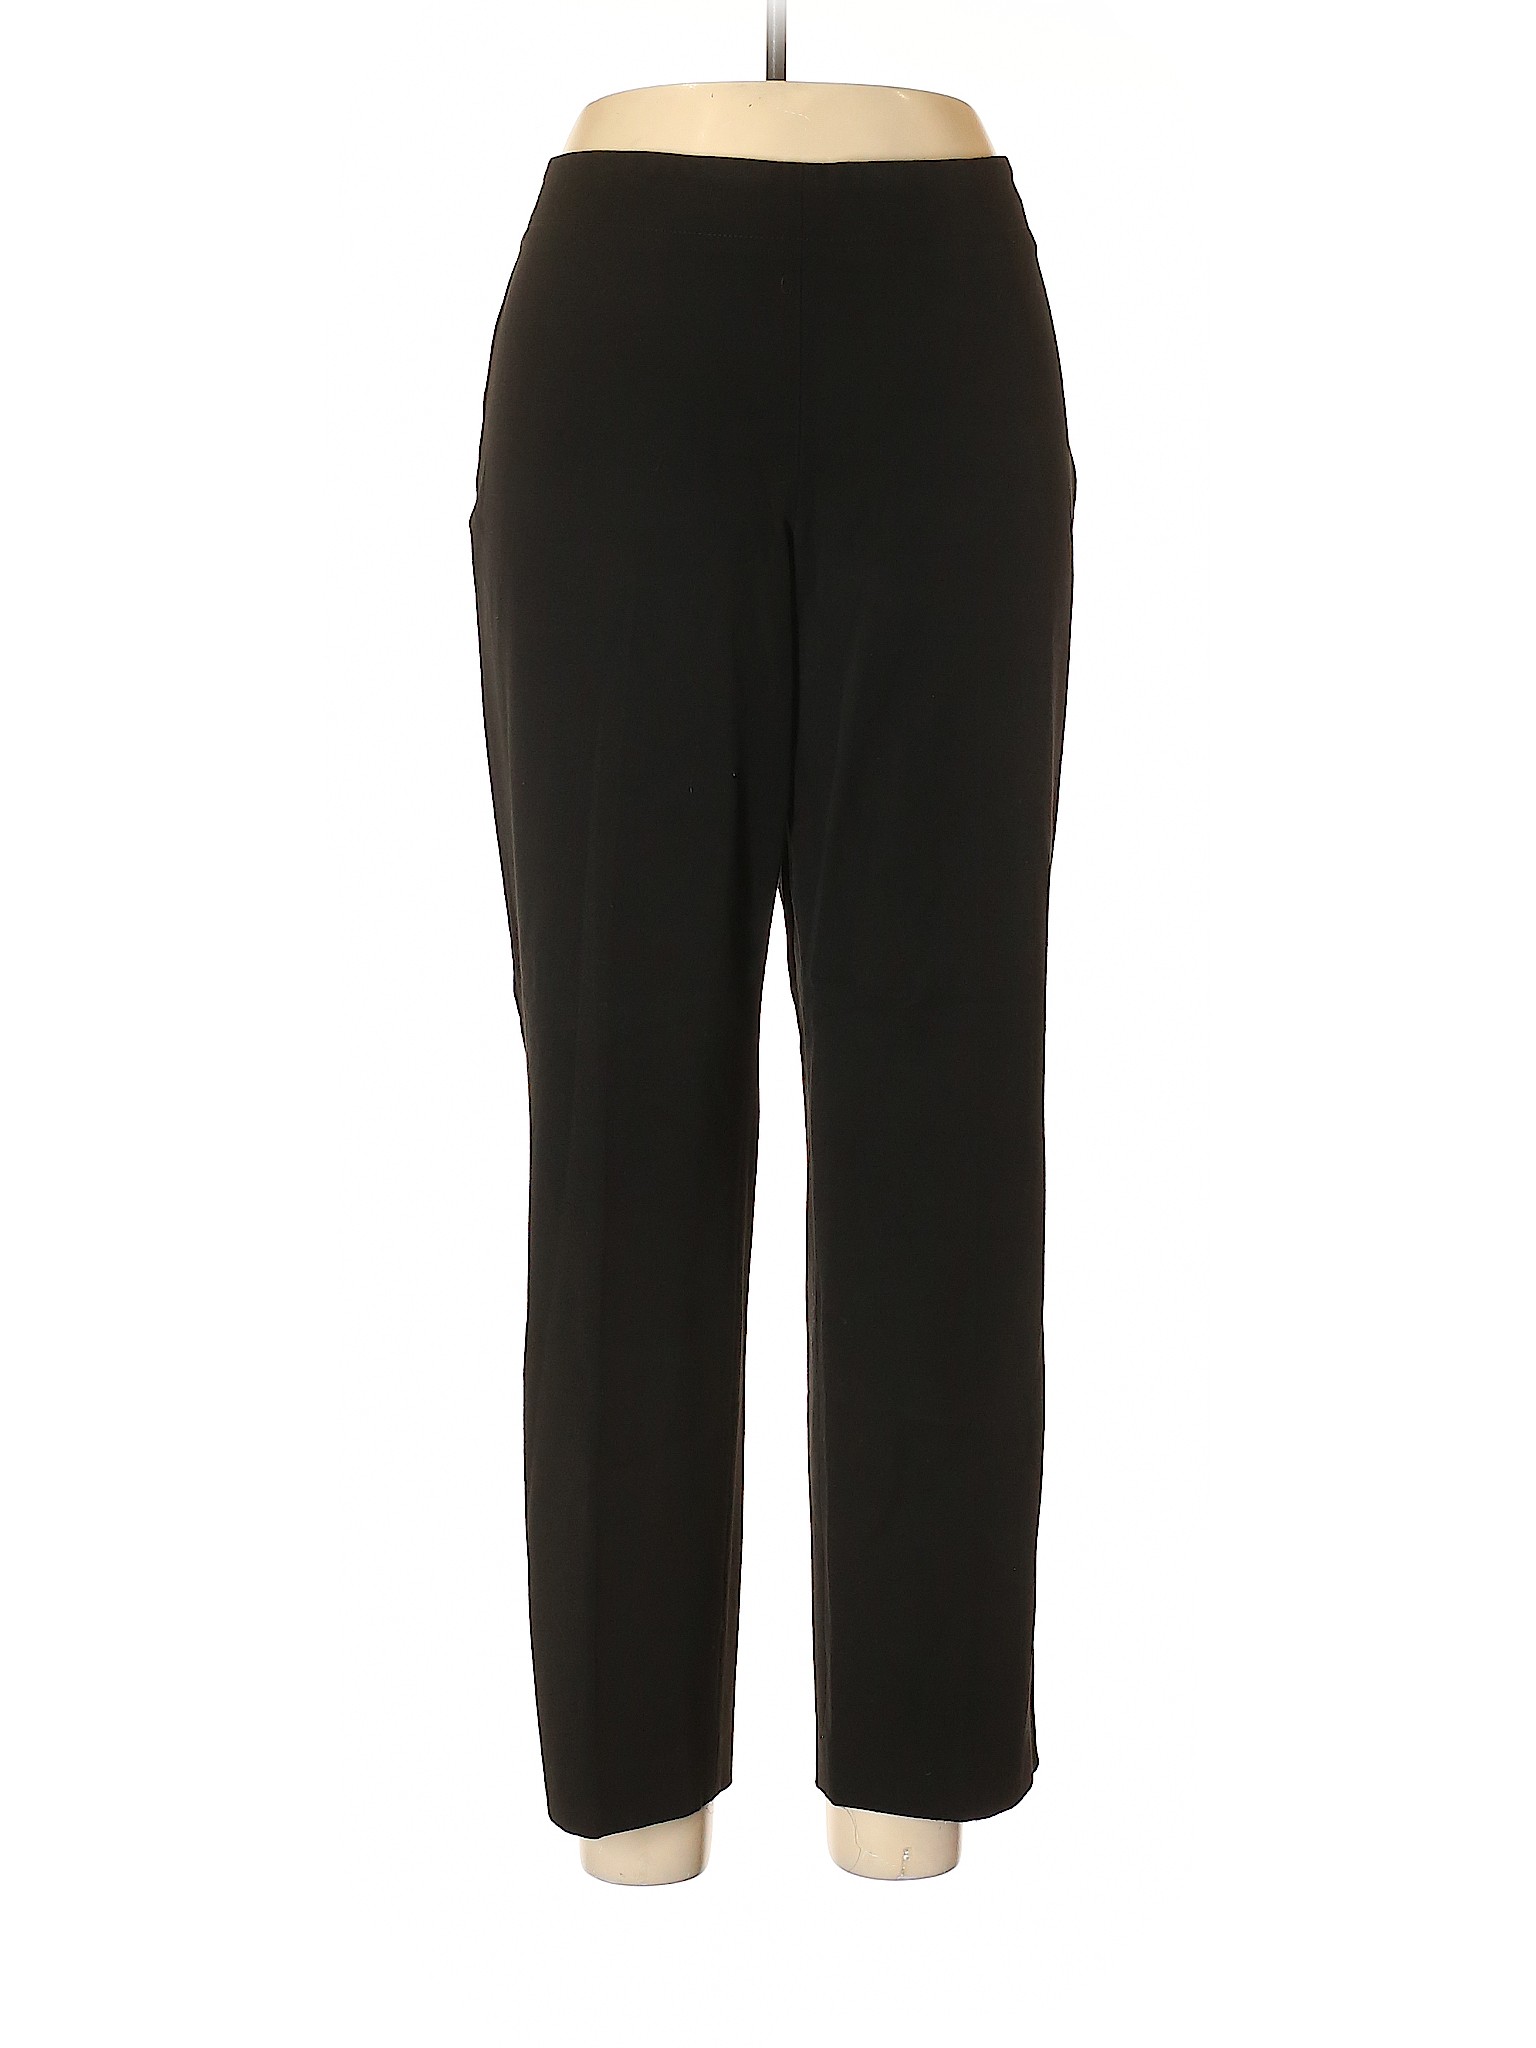 Talbots Women Black Dress Pants 14 Petites | eBay